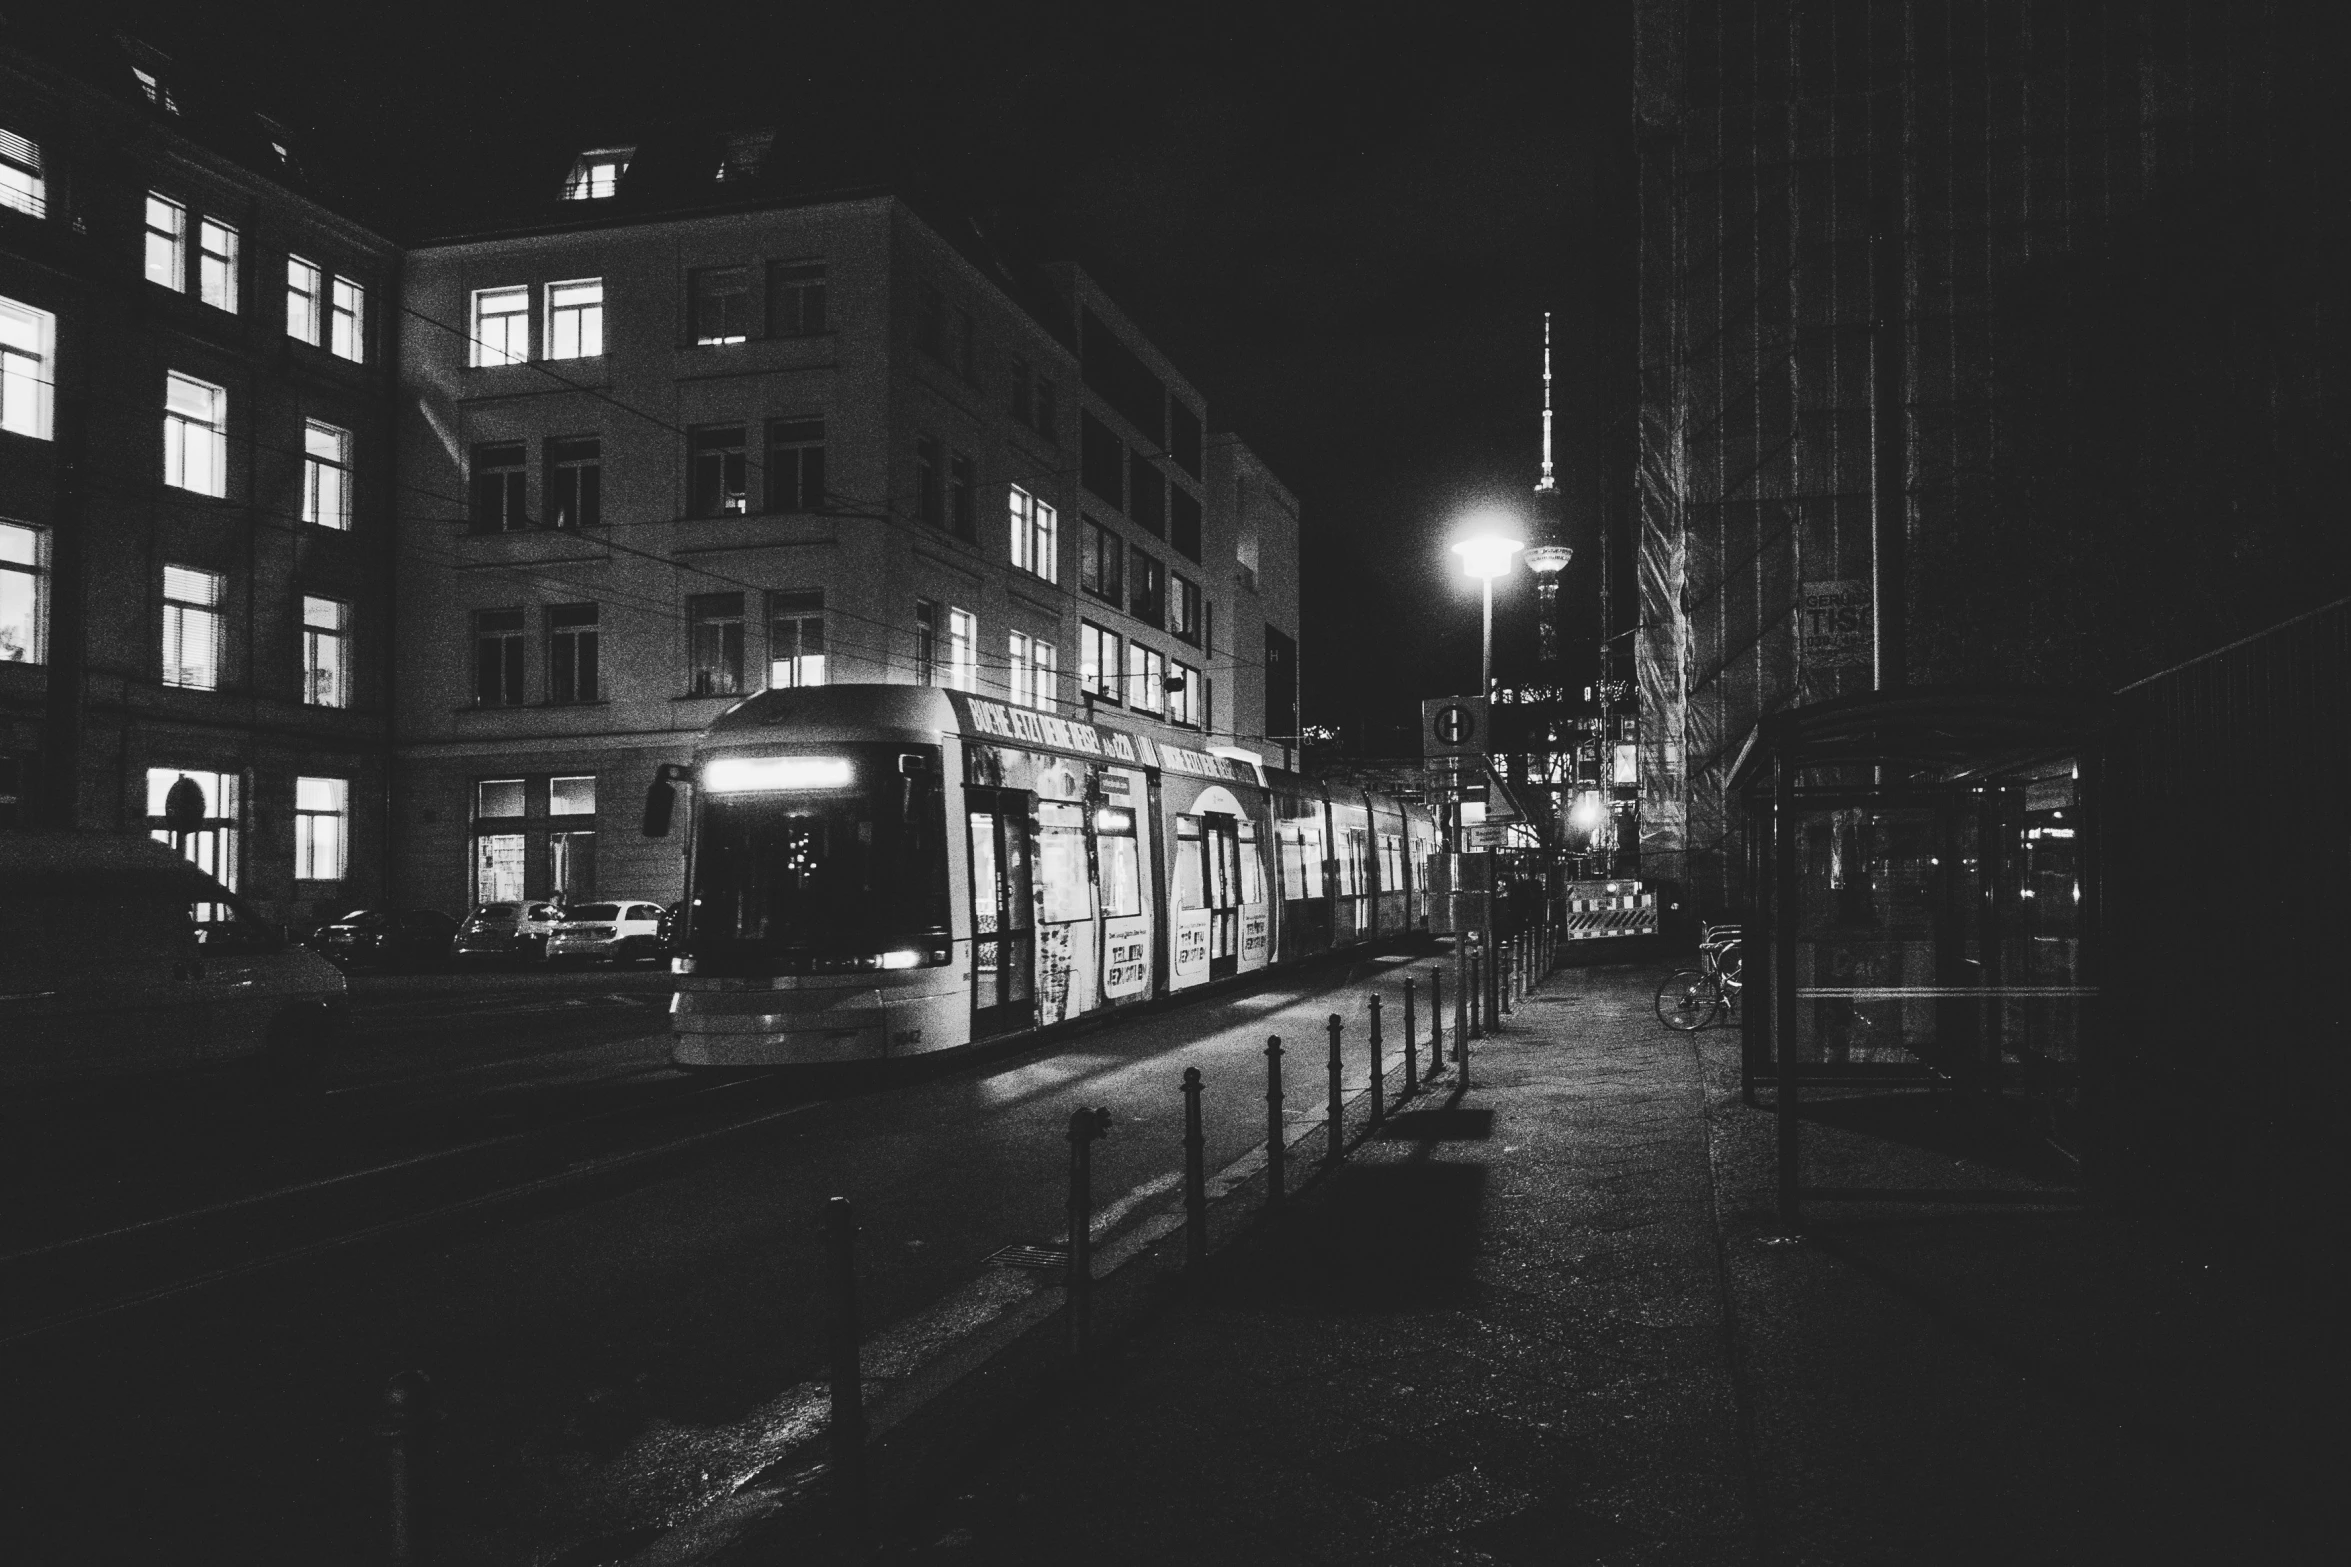 a train on tracks in an empty street